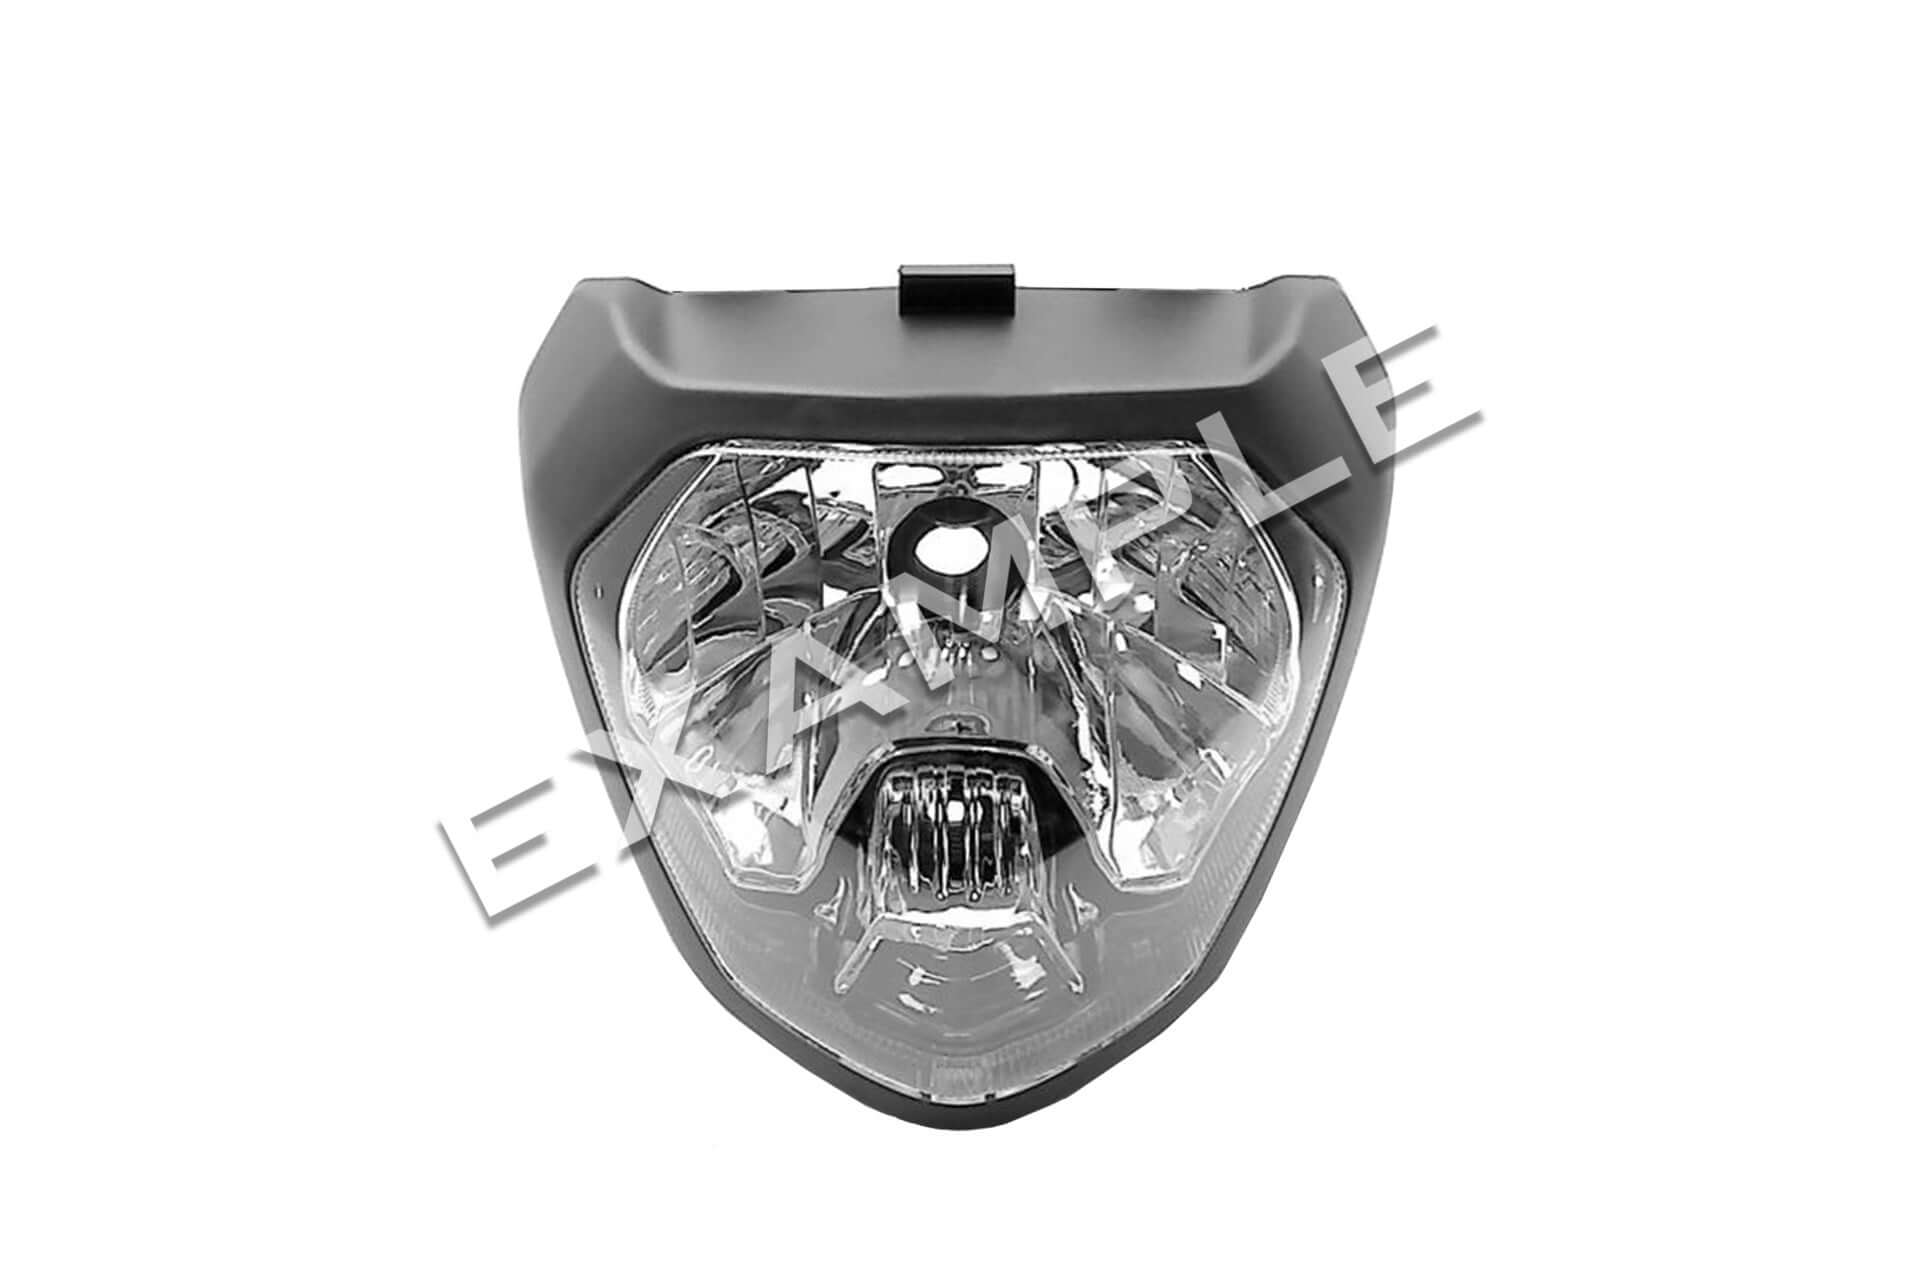 Yamaha MT-07 / FZ-07 (14-17) - Bi-LED headlight lighting upgrade kit